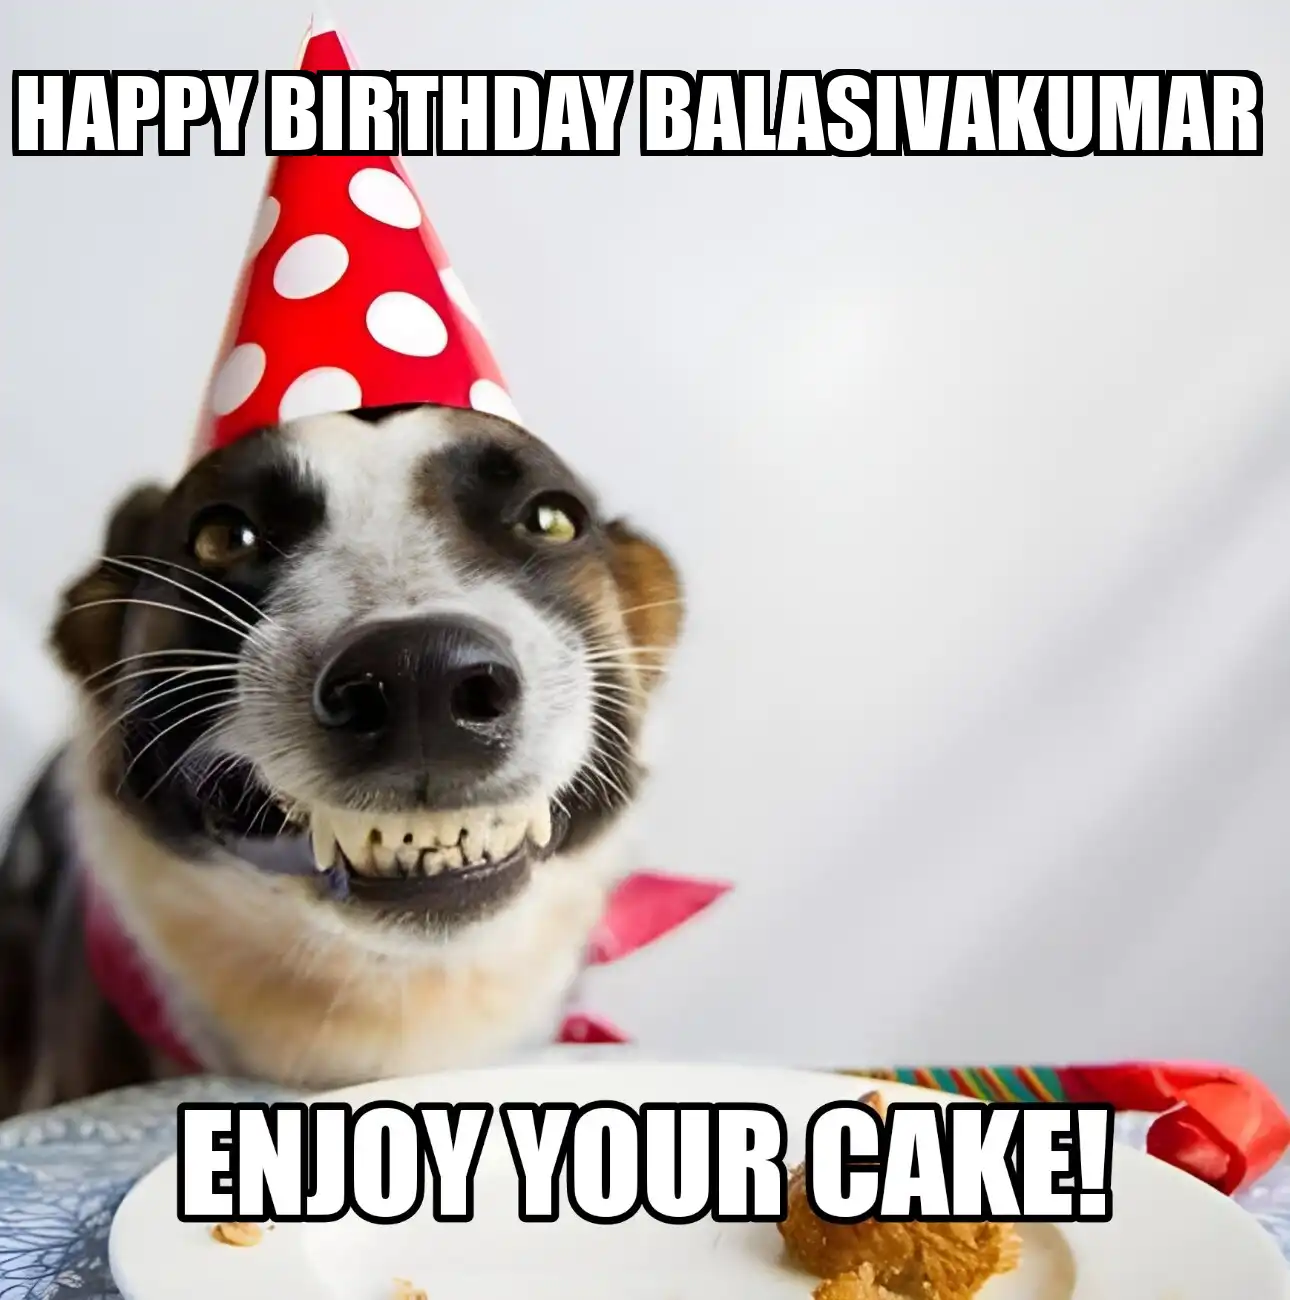 Happy Birthday Balasivakumar Enjoy Your Cake Dog Meme